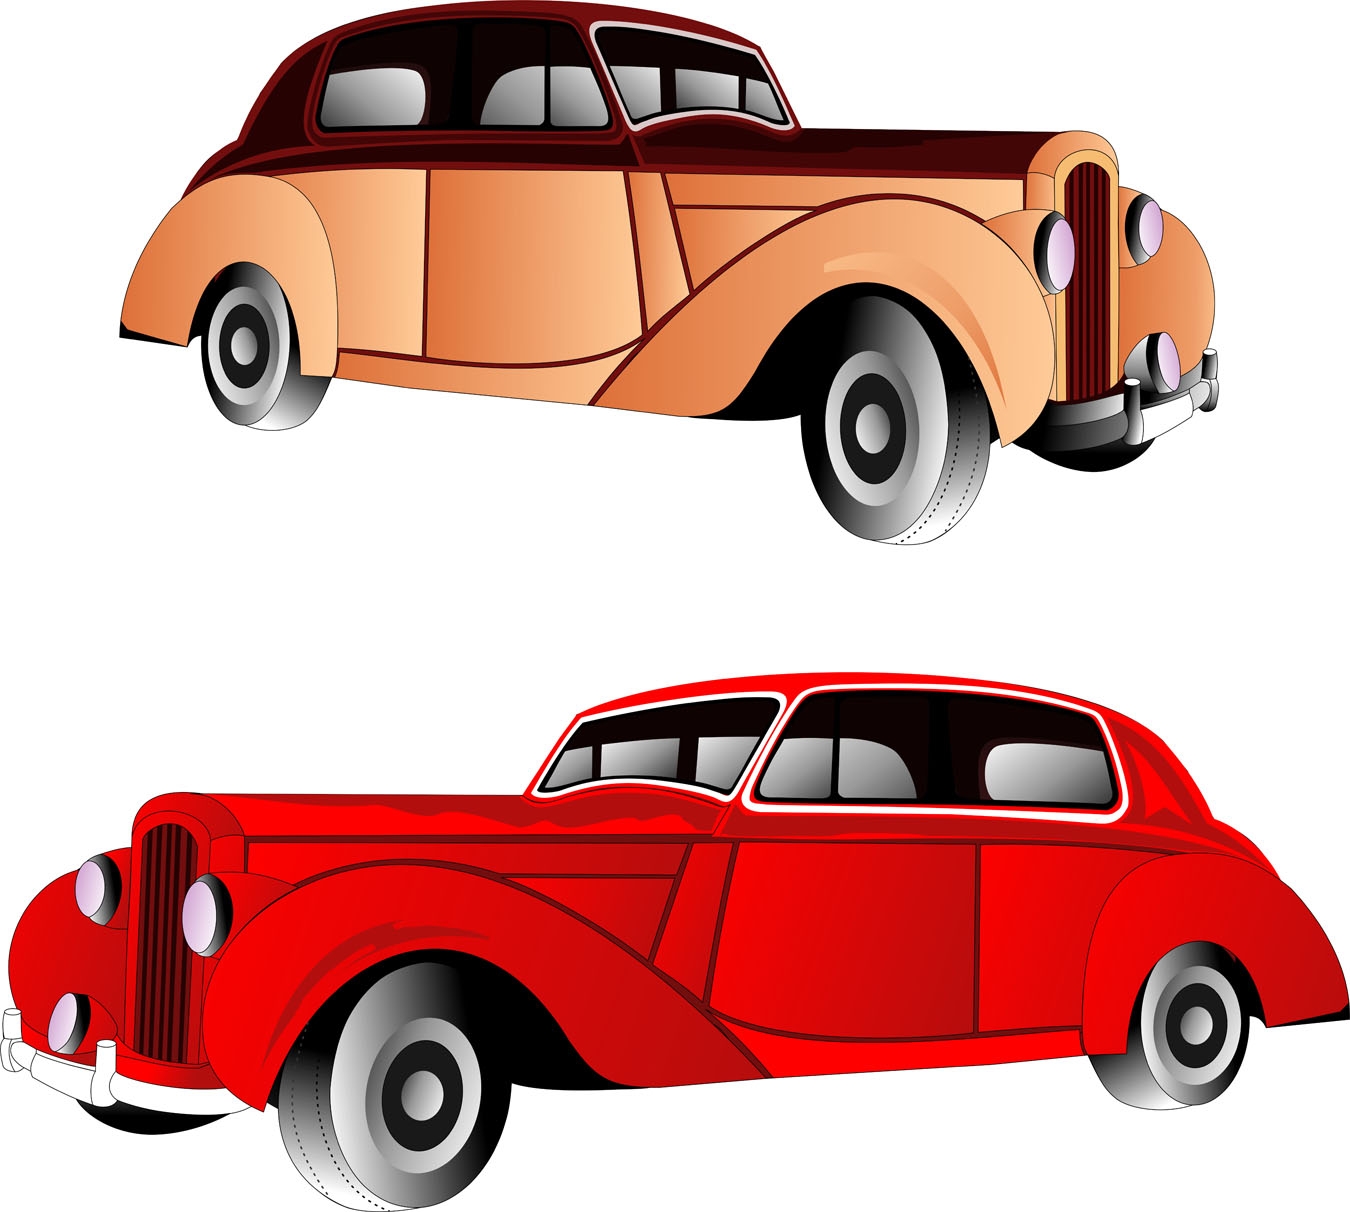 Classic Car Clip Art Free : Car Clipart Cars Rod Hot Classic Clip ...